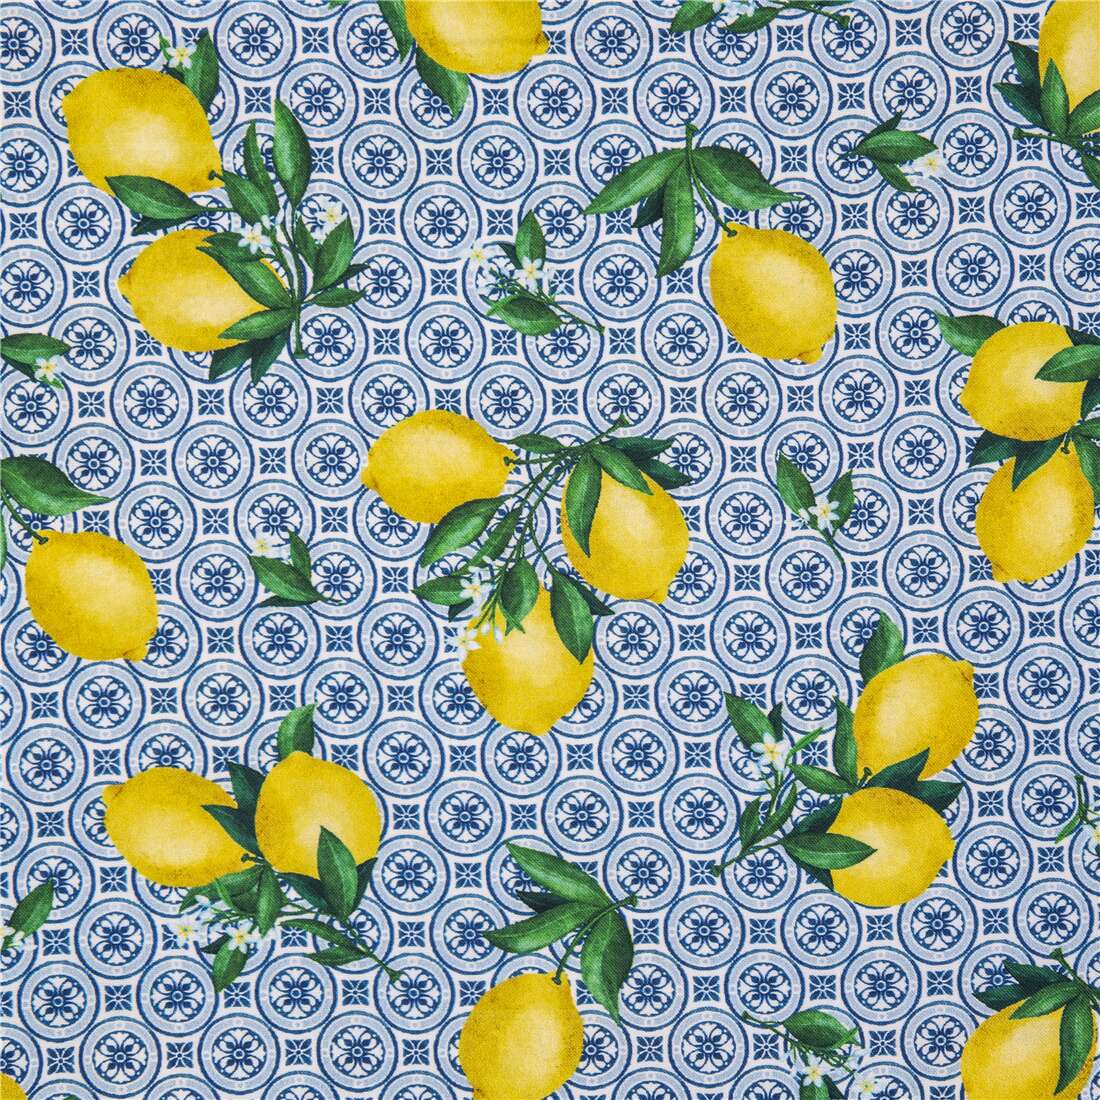 Lemon Vintage Tiles Fabric by Michael Miller - modeS4u